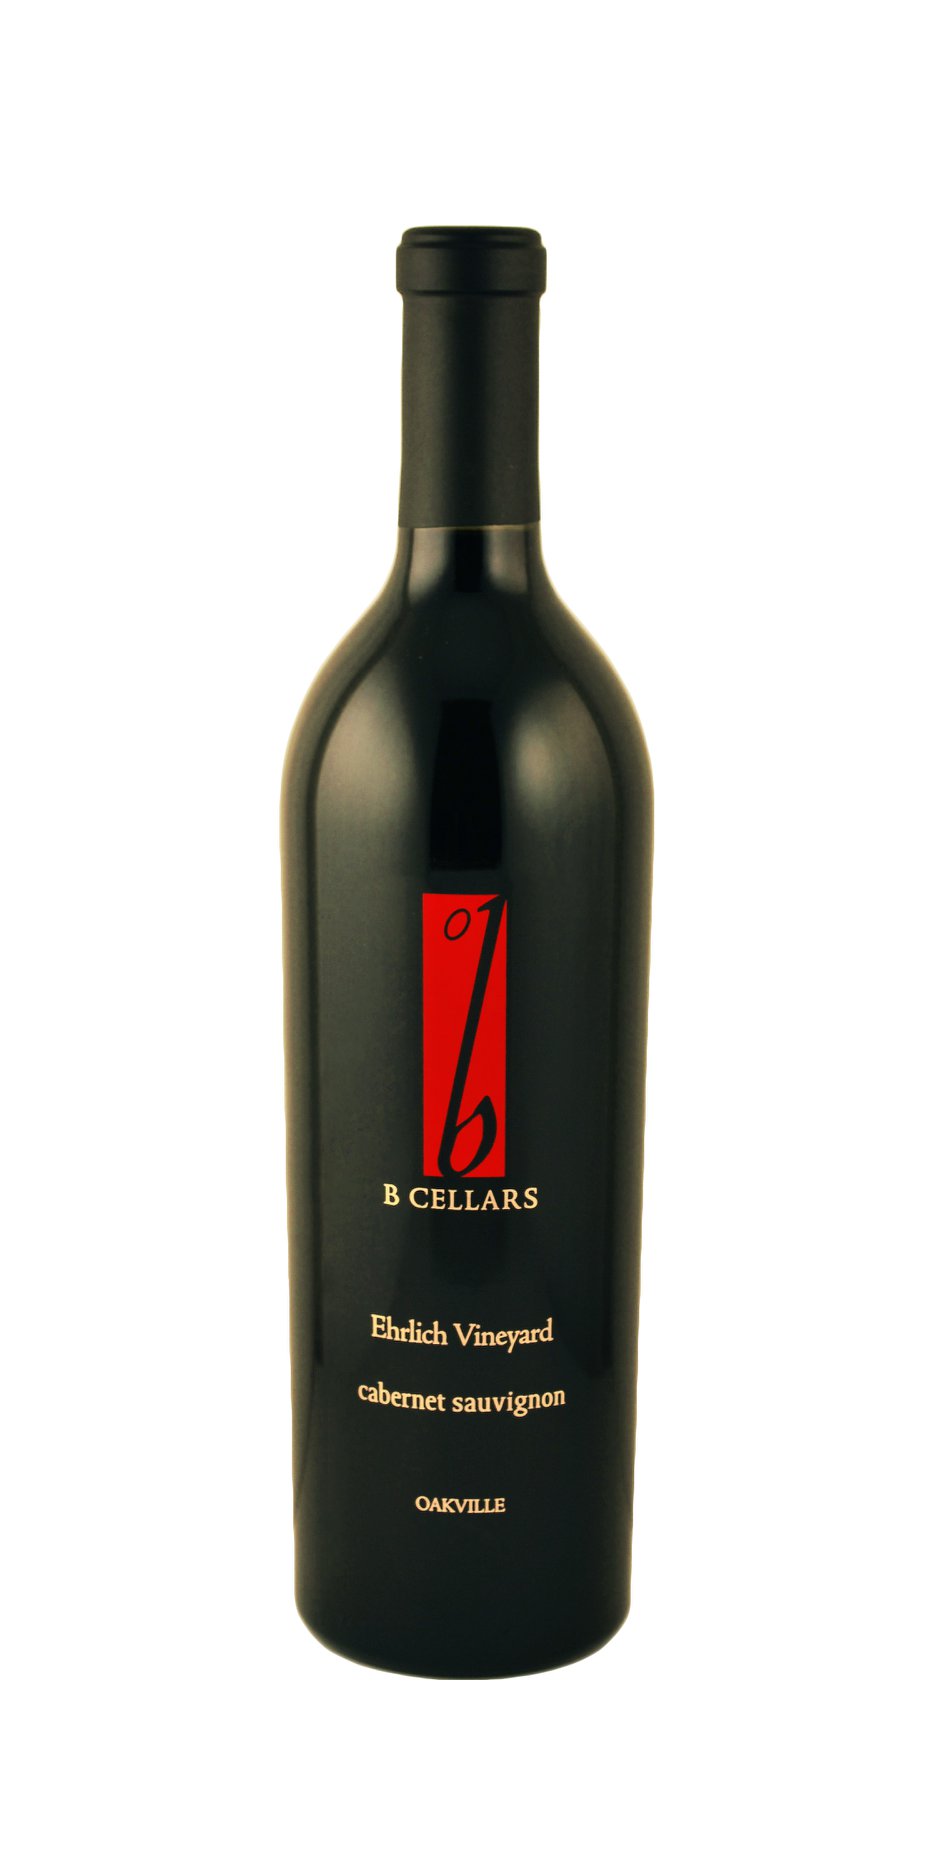 B Cellars –Cabernet Sauvignon 2015, Ehrlich Vineyard – Oakville, Napa Valley